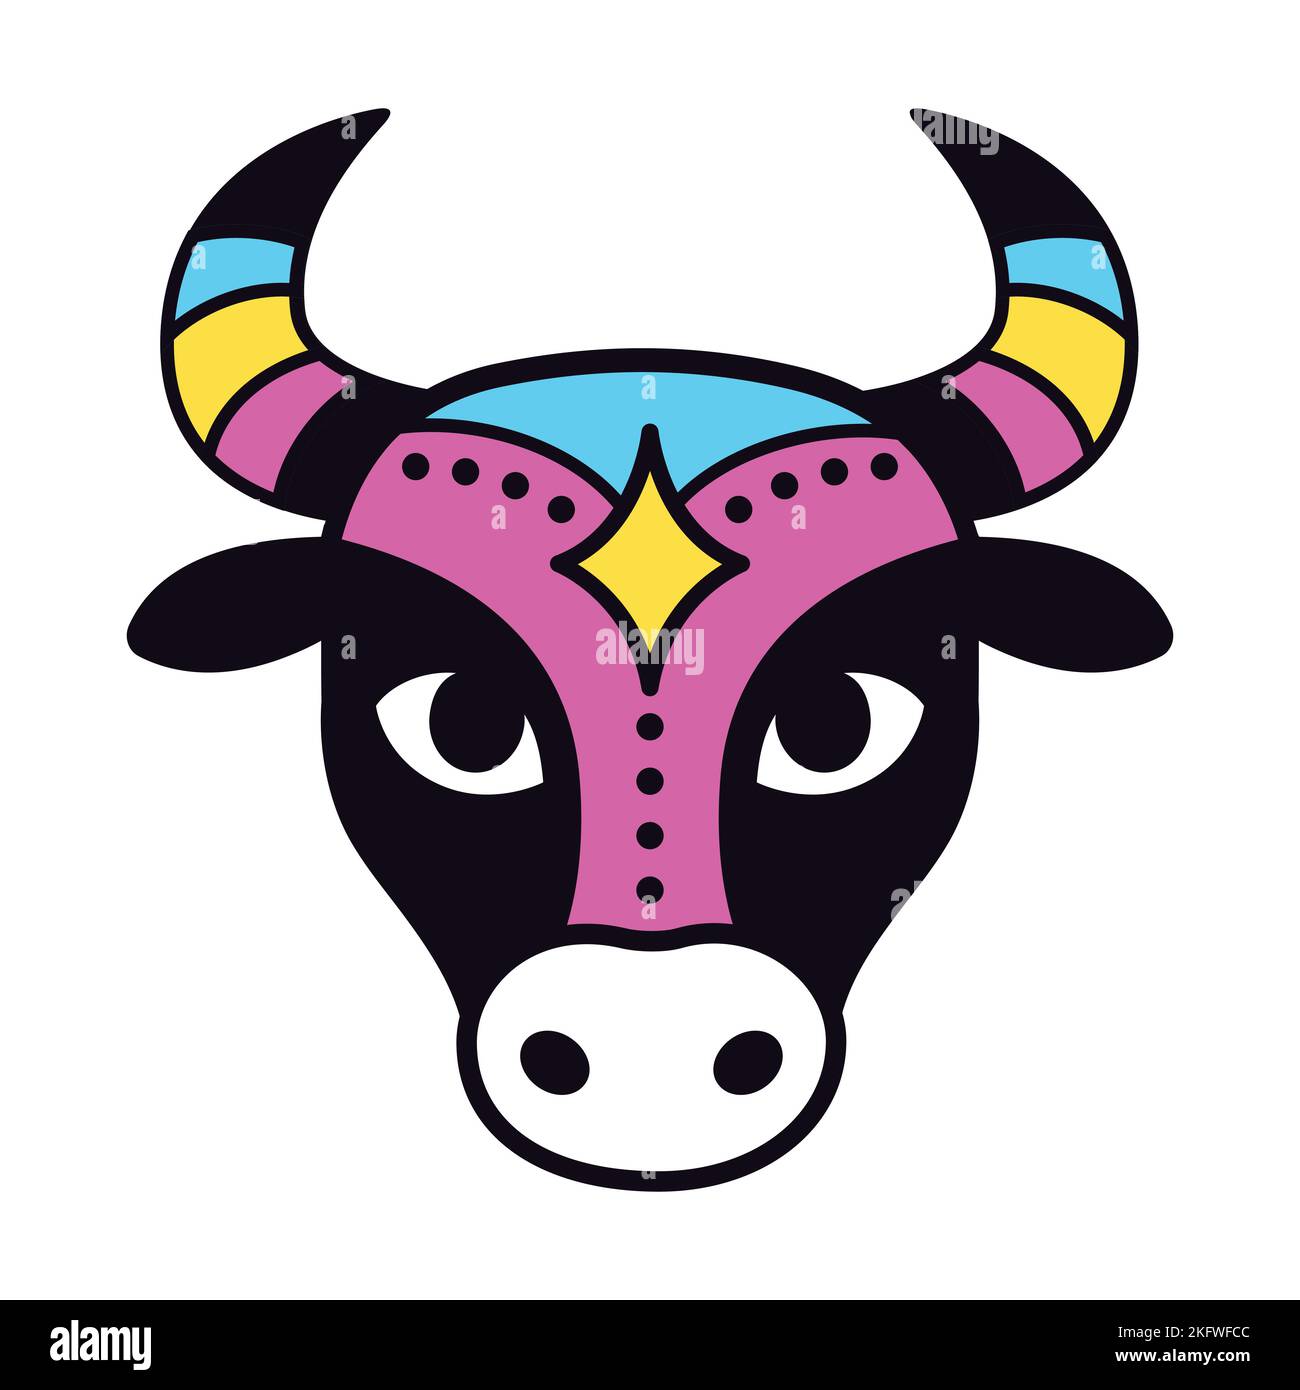 Bumba Meu Boi traditional Brazilian celebration. Ox face icon in simple cute cartoon style. Vector clip art illustration. Stock Vector